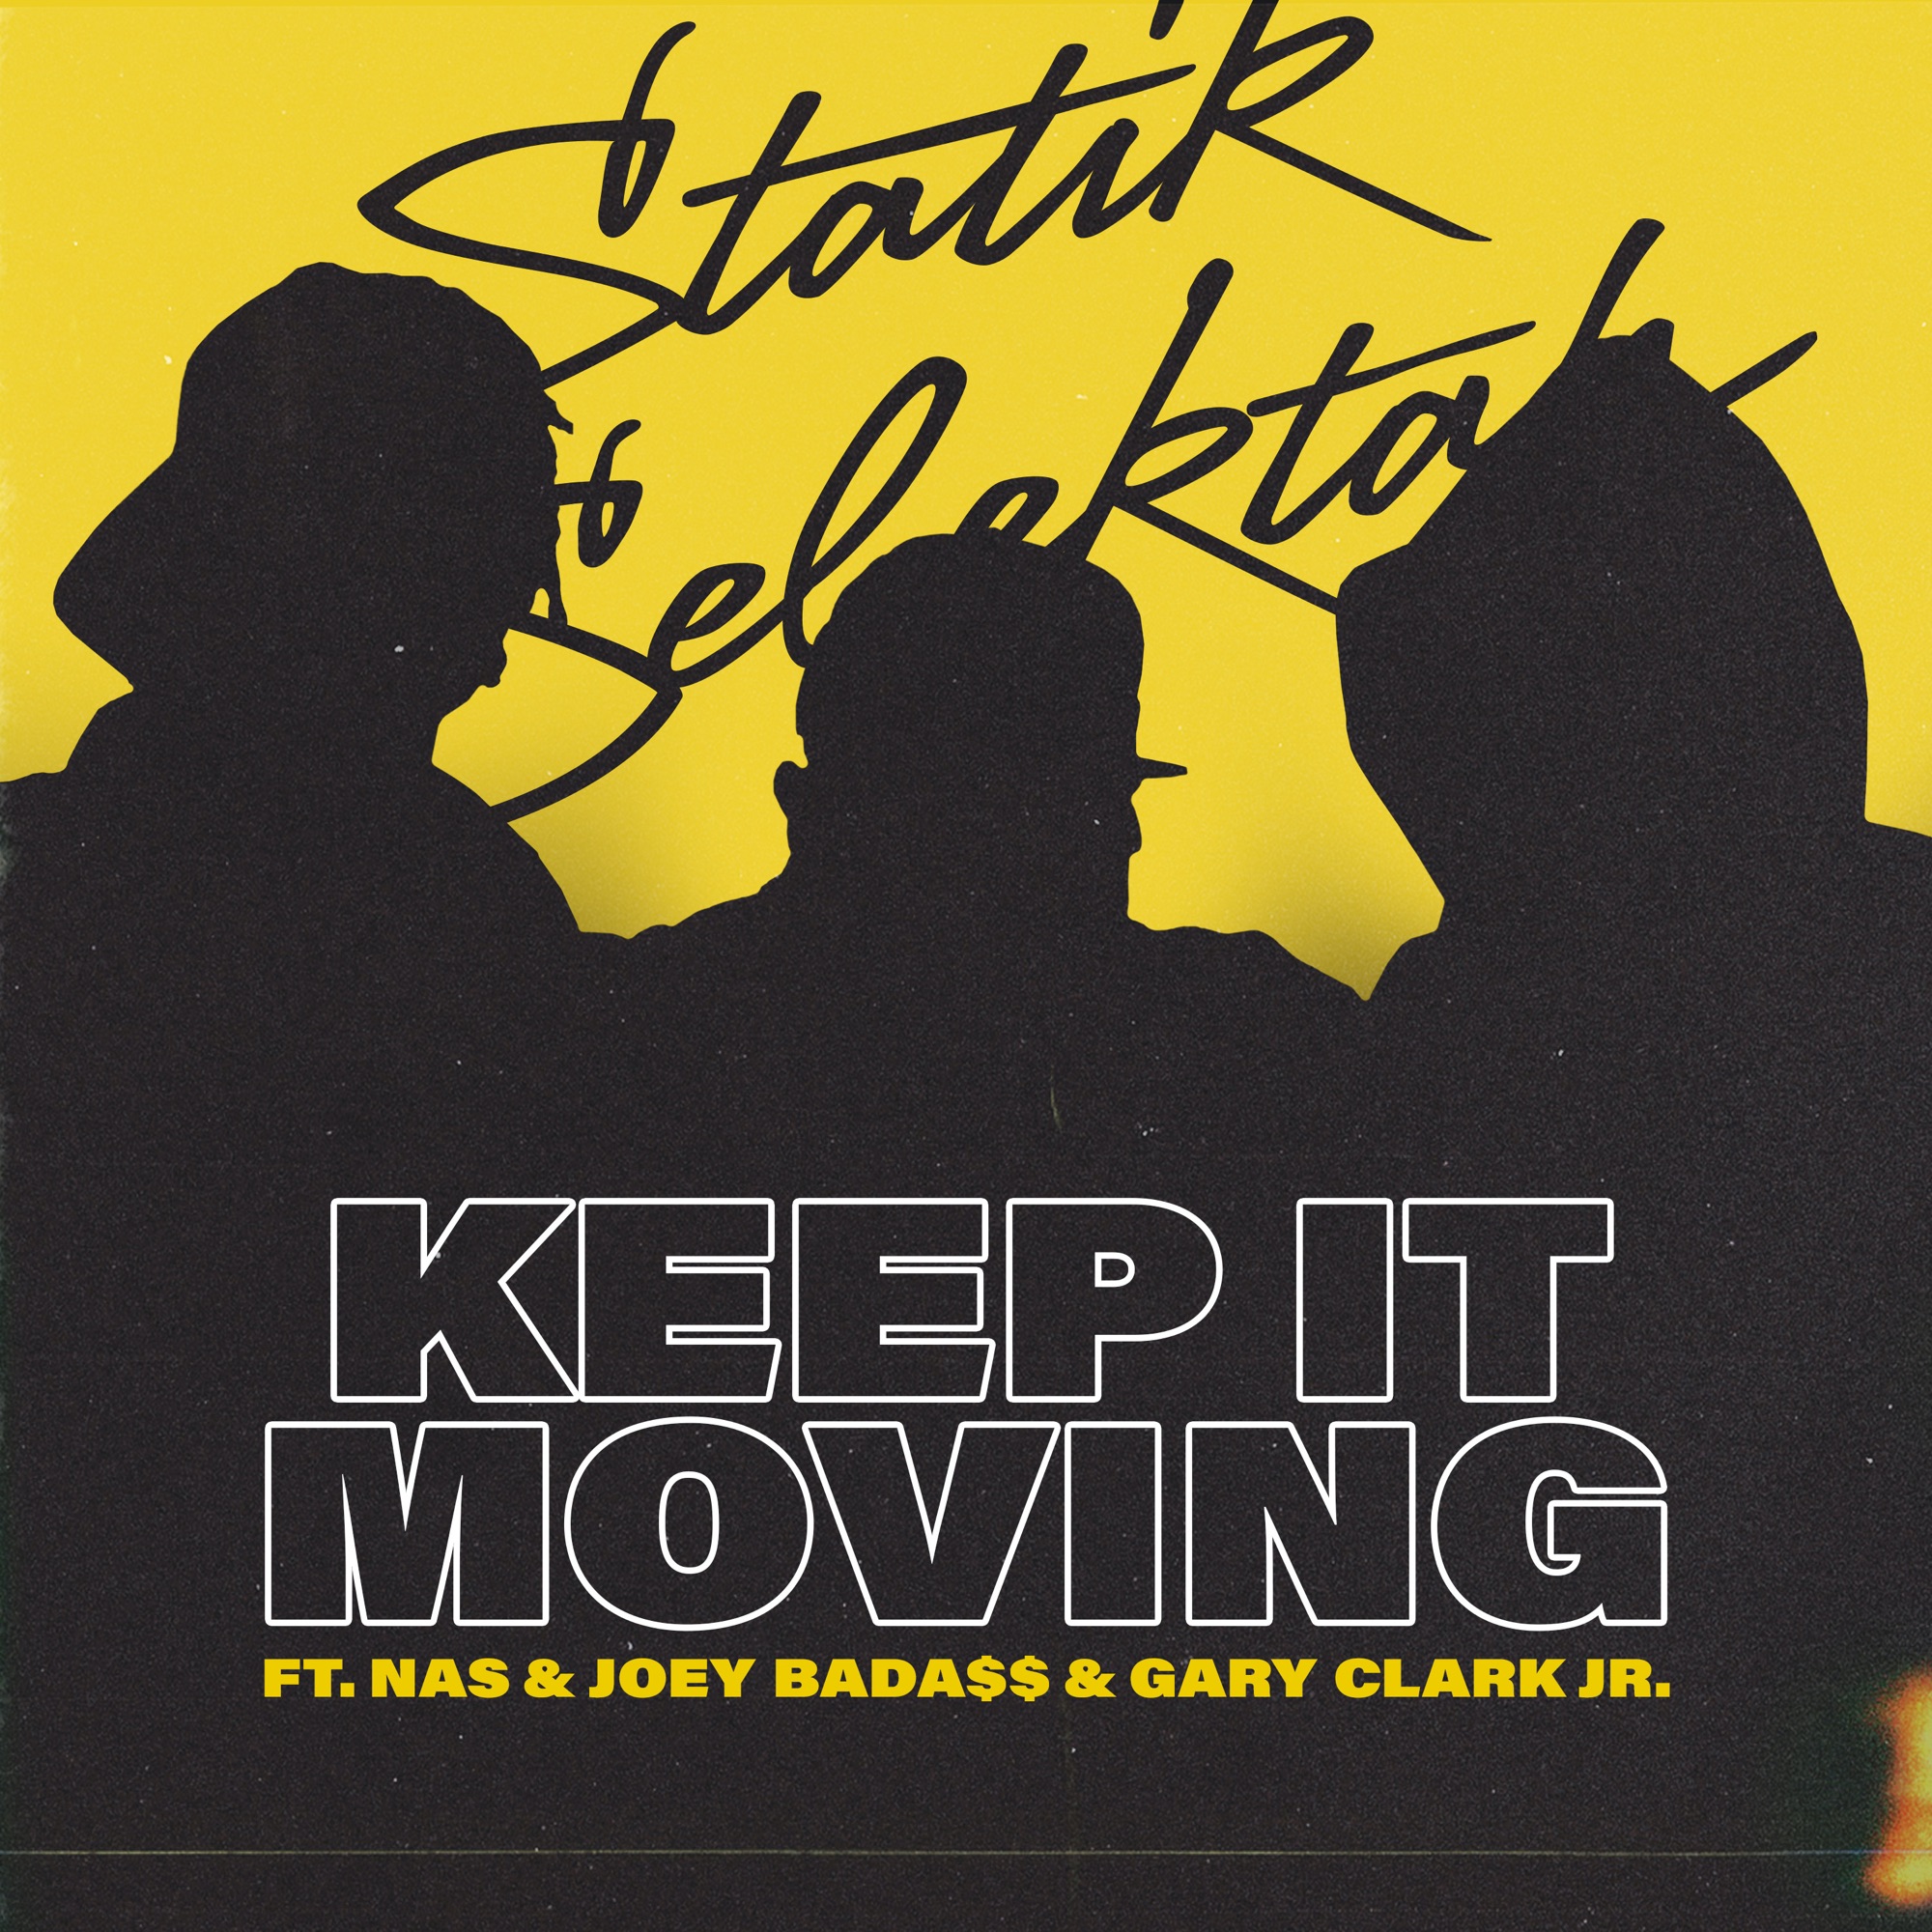 Statik Selektah - Keep It Moving (feat. Nas, Joey Bada$$ & Gary Clark Jr.) - Single